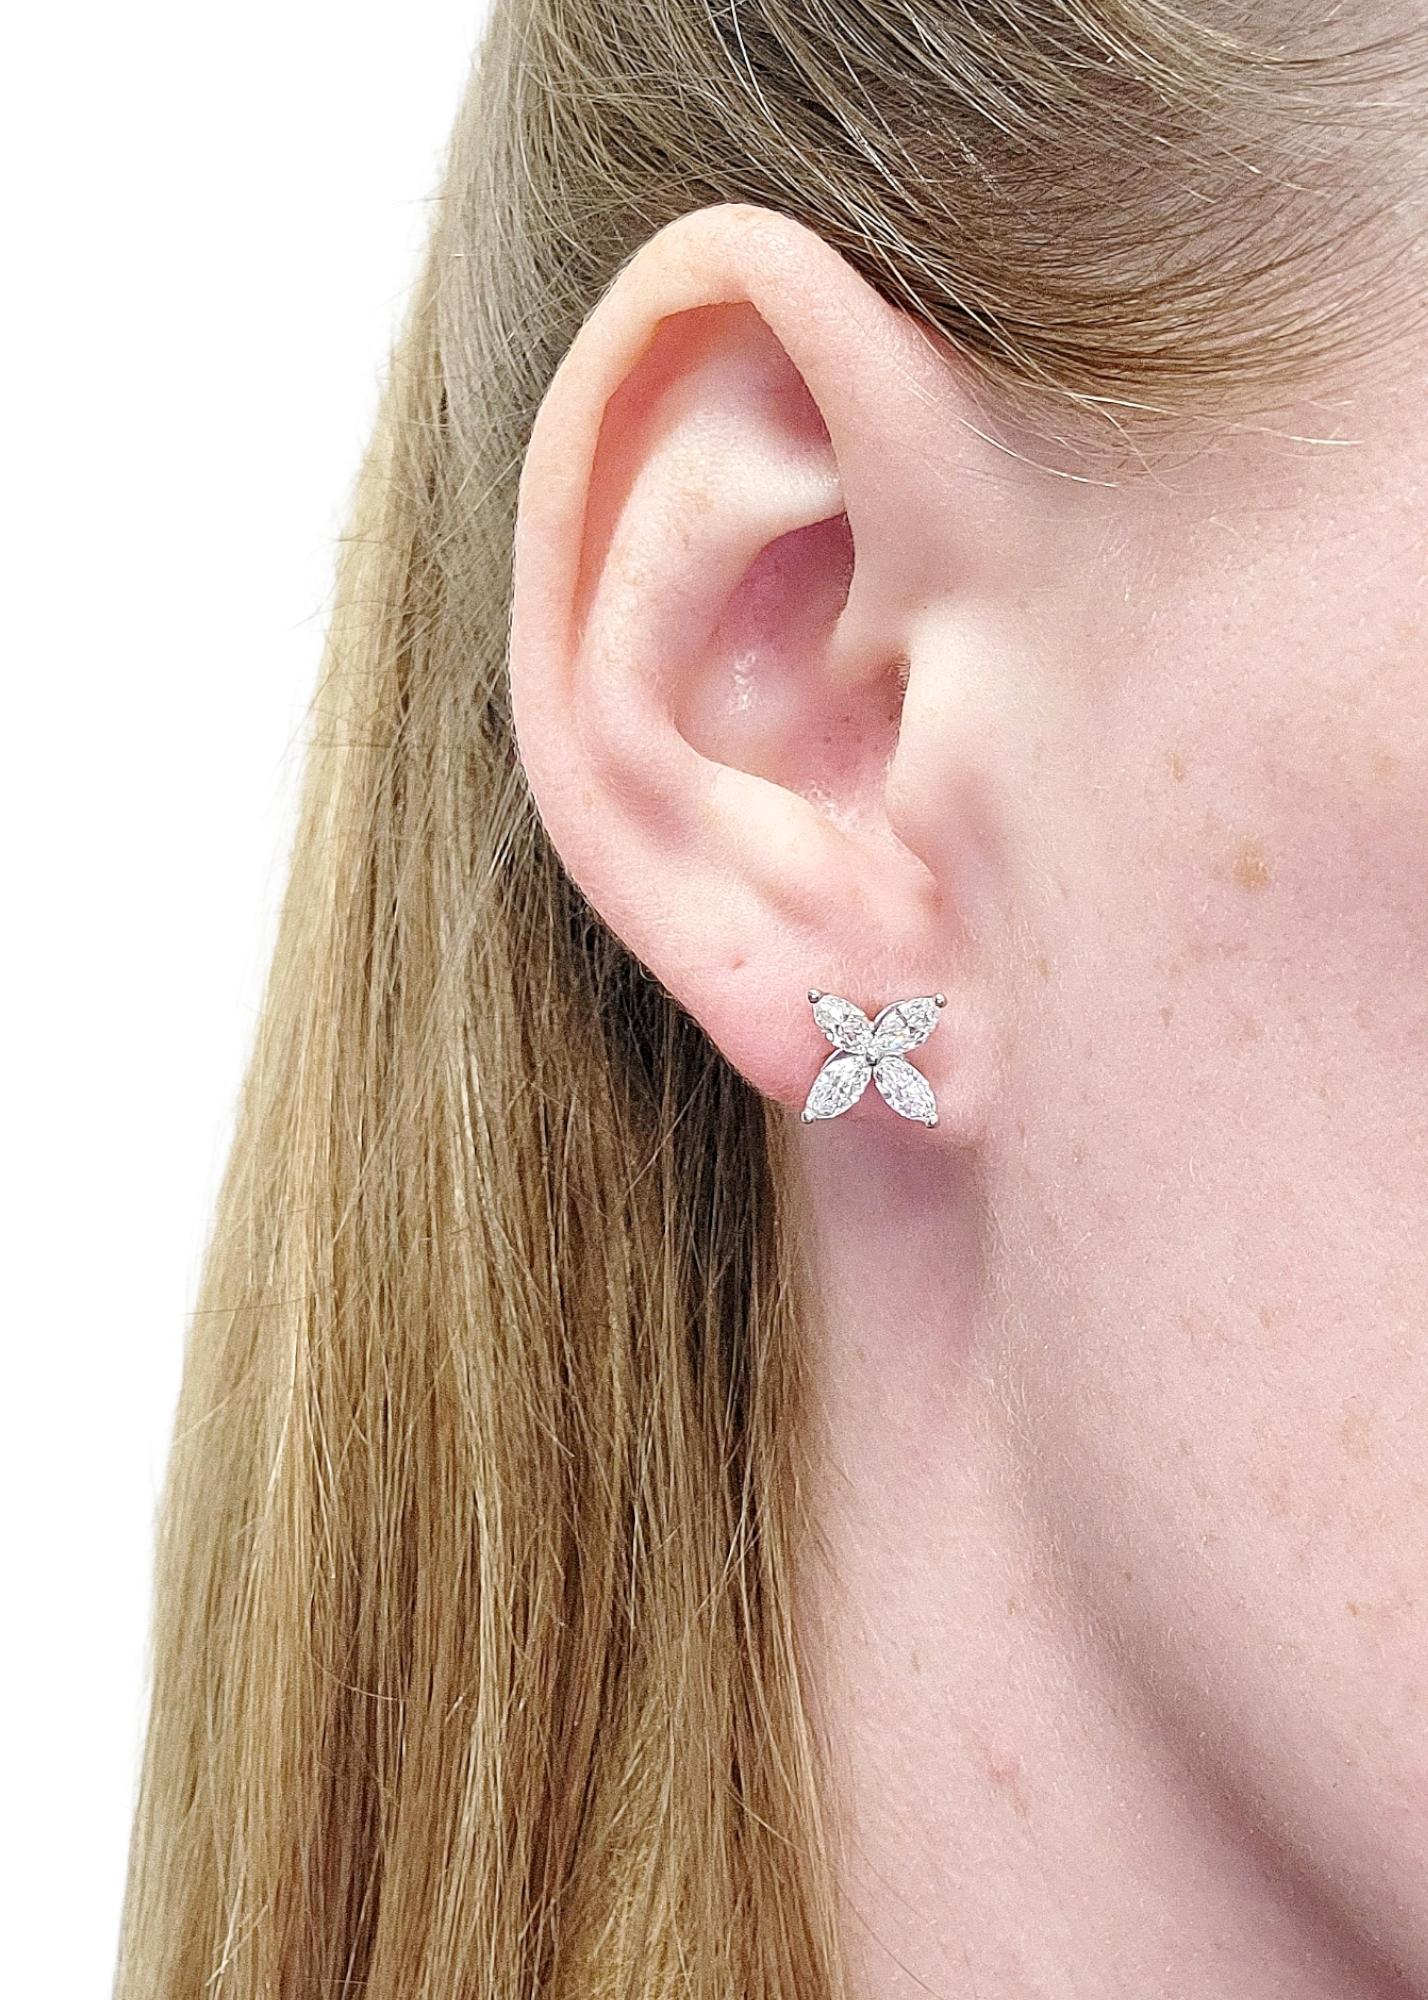 Tiffany & Co. Victoria Medium .92 Carats Diamond Stud Earrings in Platinum 5